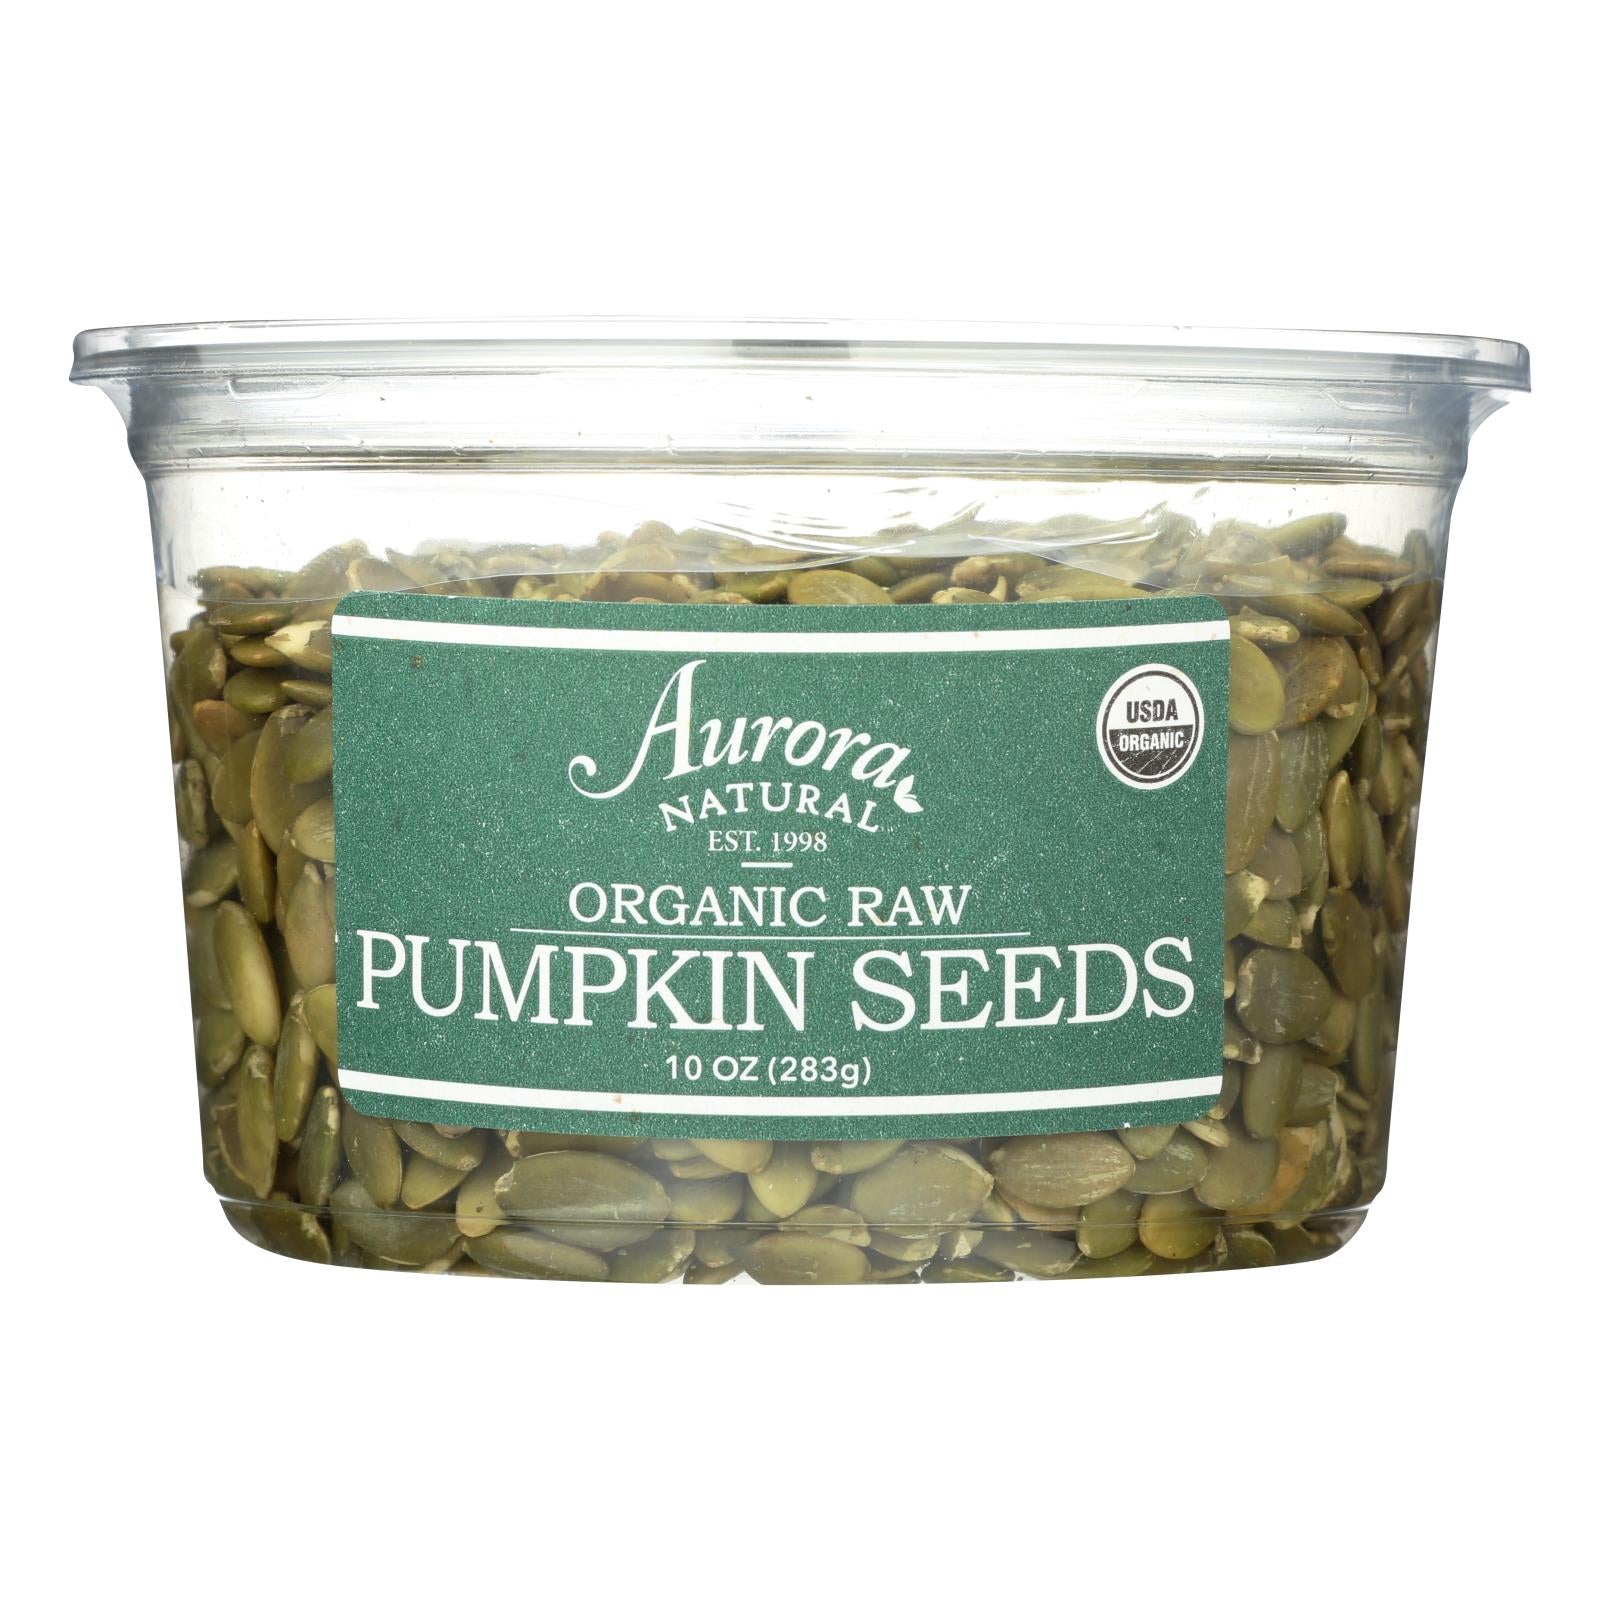 Aurora Natural Products, Aurora Natural Products - Organic Raw Pumpkin Seeds - Case of 12 - 10 oz. (Pack of 12)